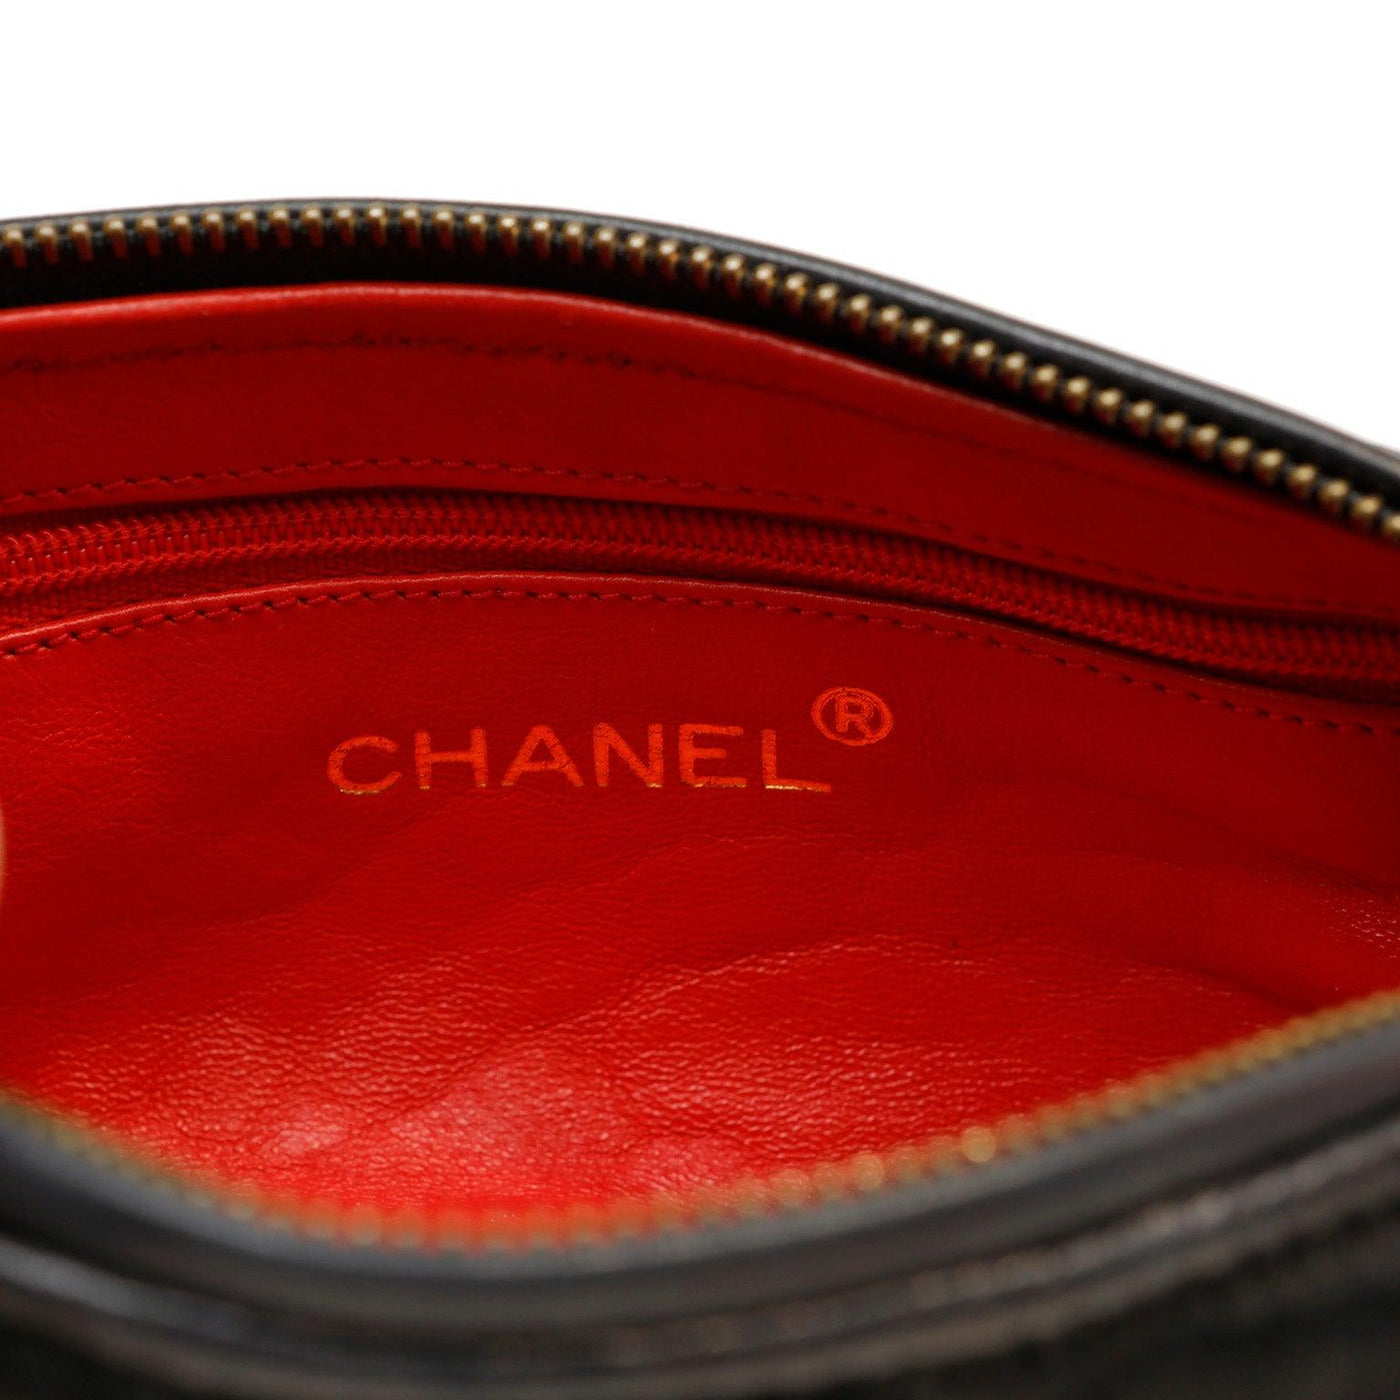 Chanel Black Satin Tassel Pouch - Only Authentics